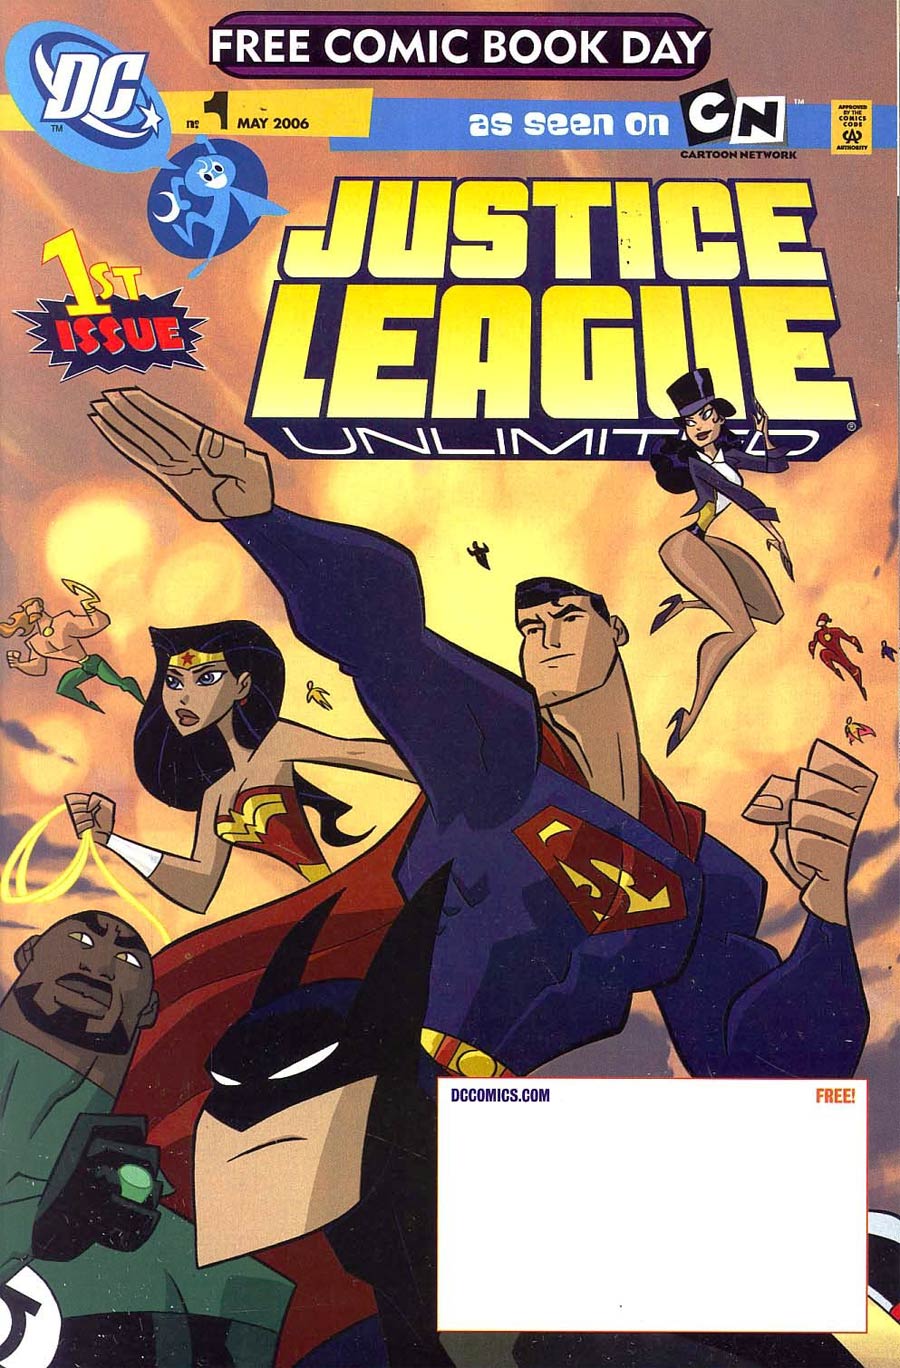 Justice League Unlimited #1 FCBD 2006